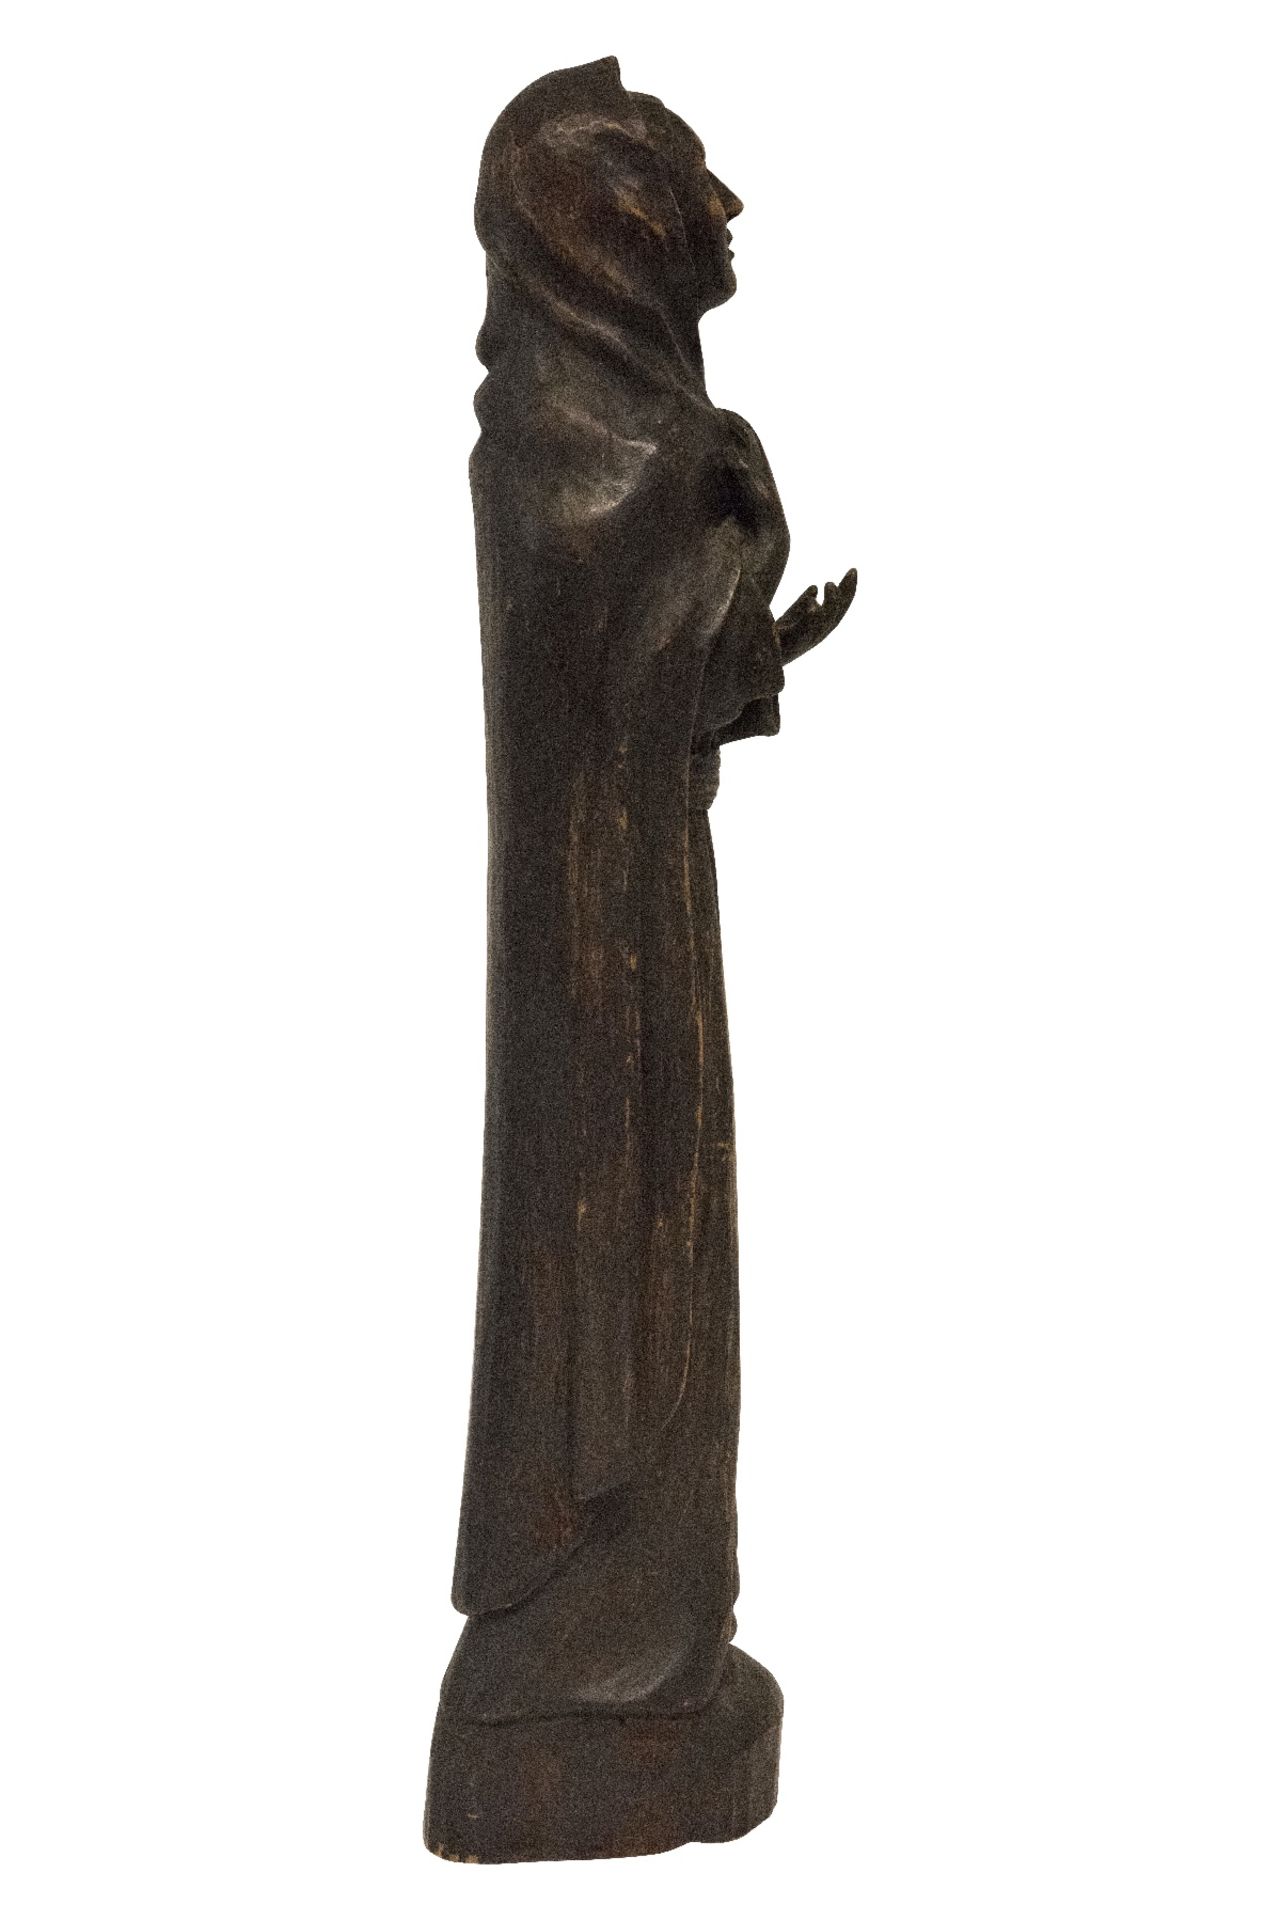 Madonna Holzskulptur | Madonna Wood Sculpture - Image 2 of 5